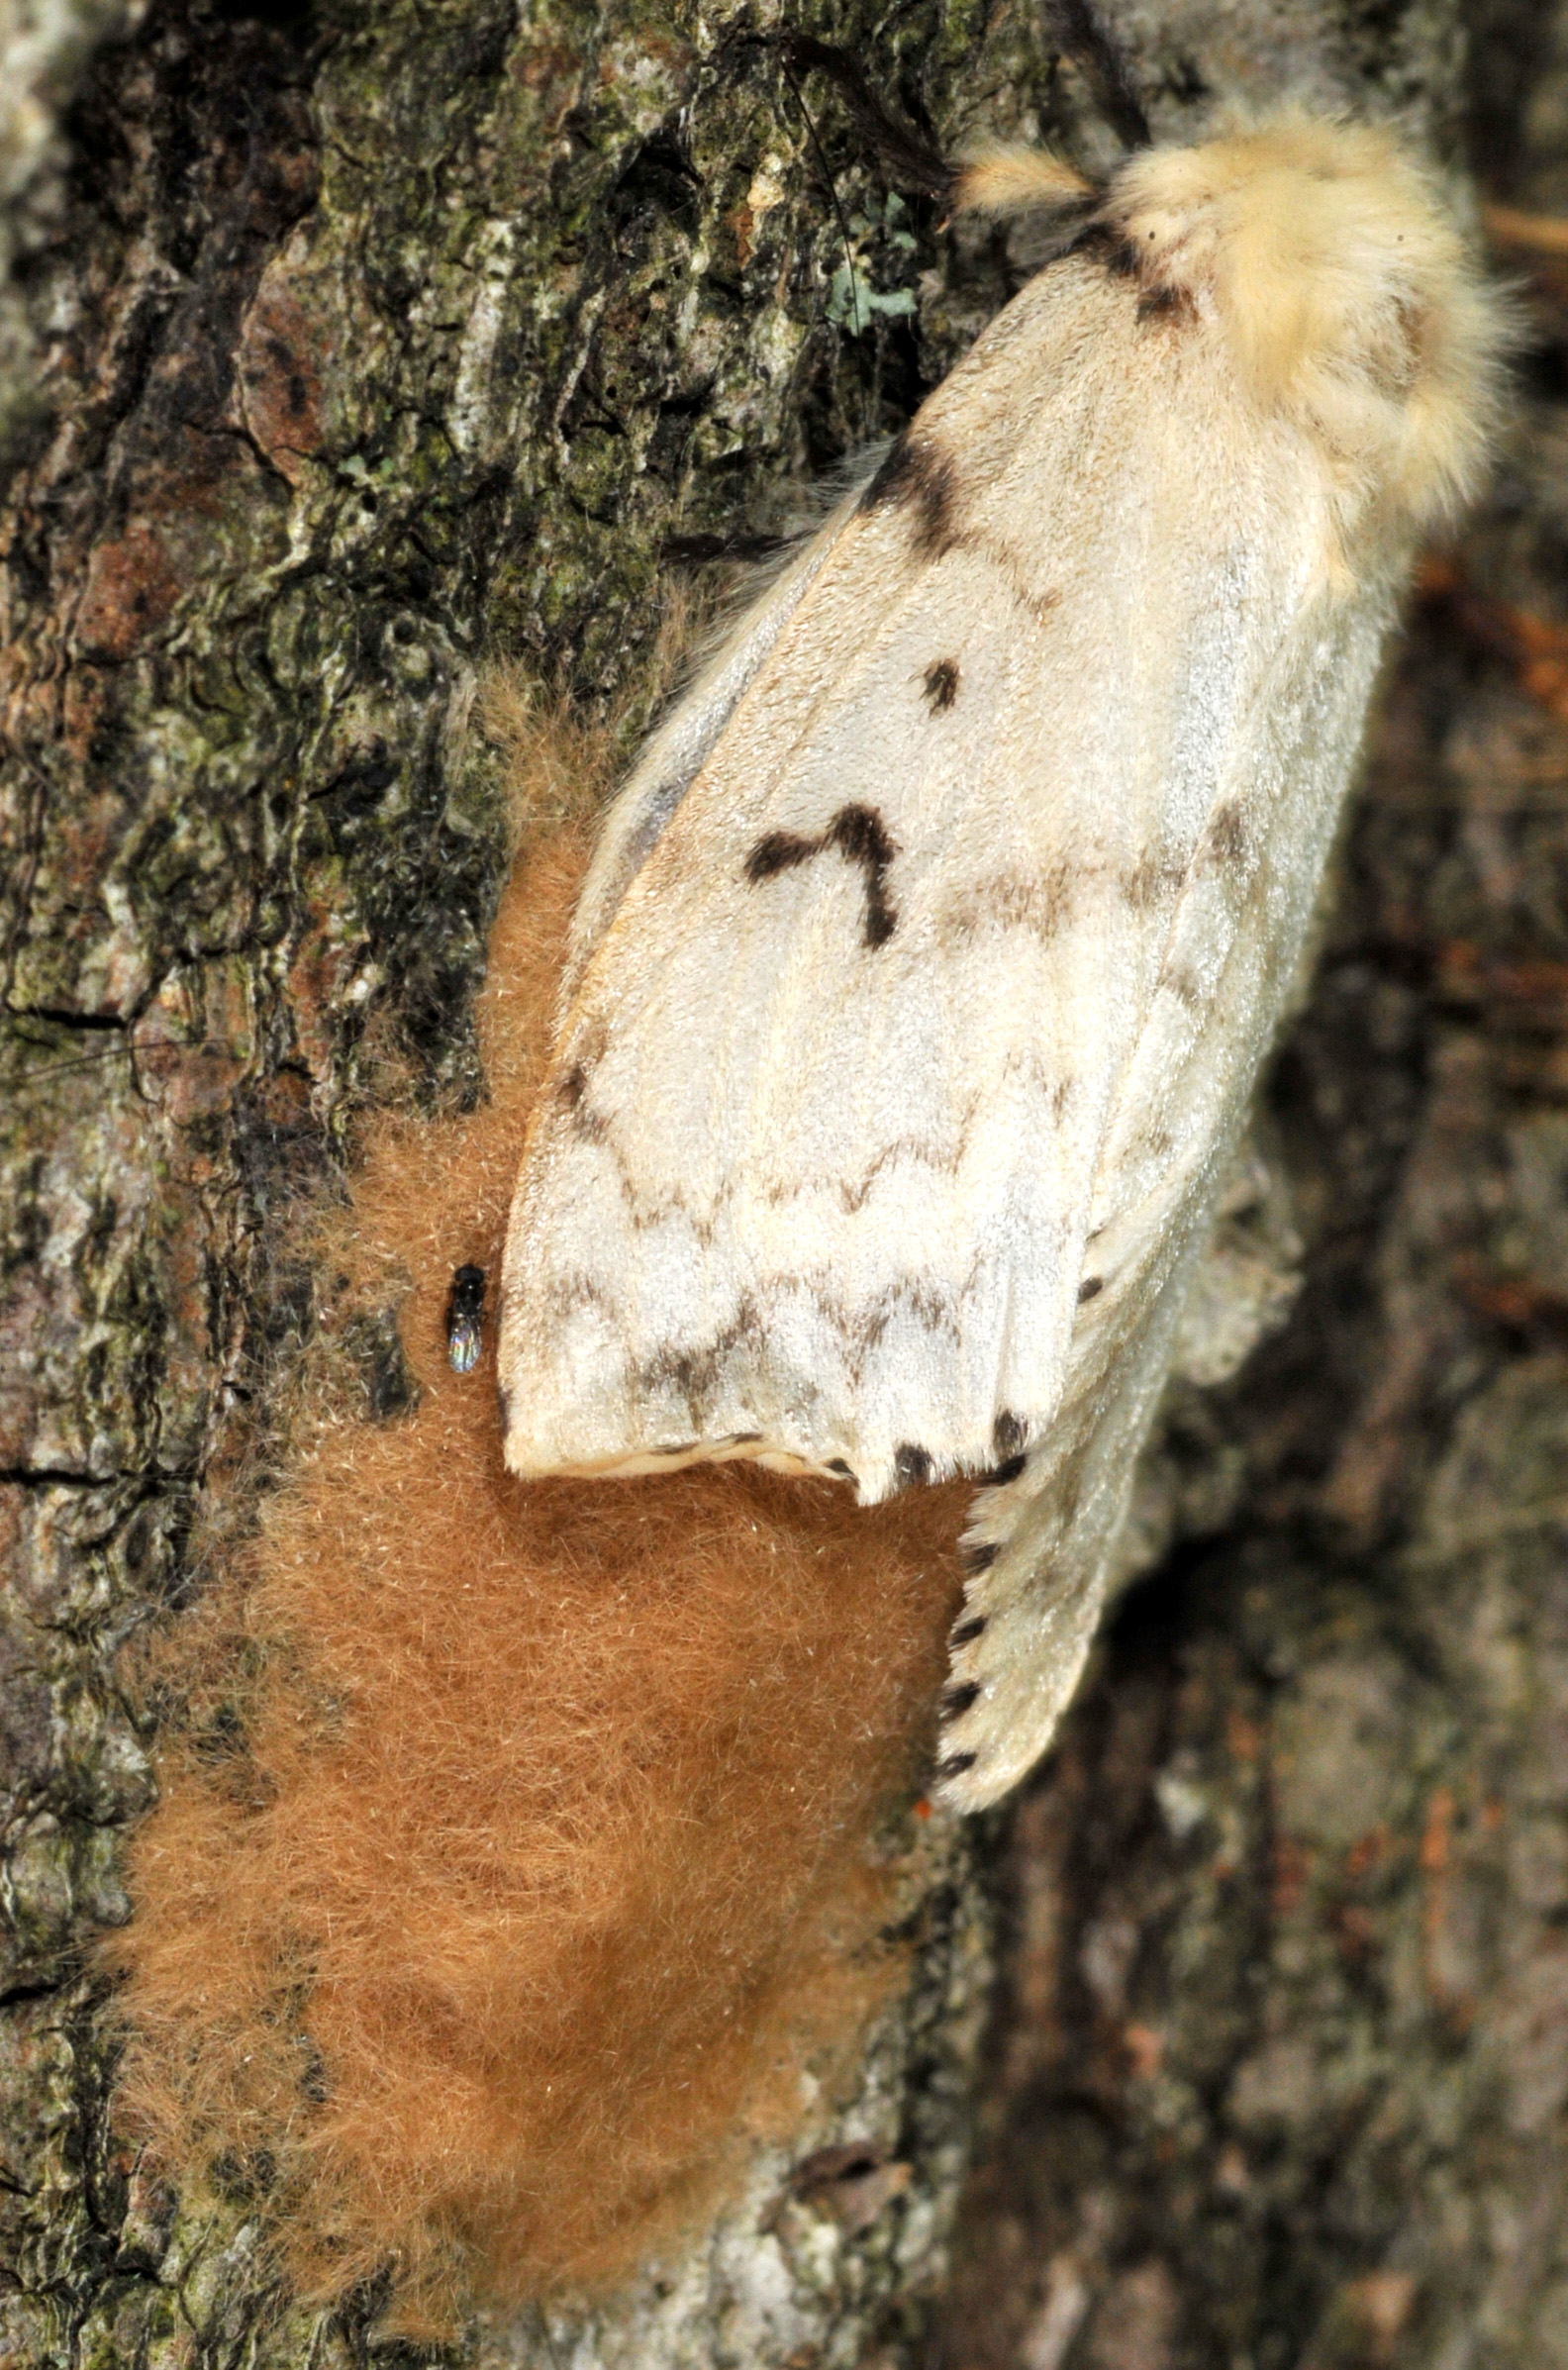 Spongy moth adult with egg mass. (Photo Credit: John Obermeyer)